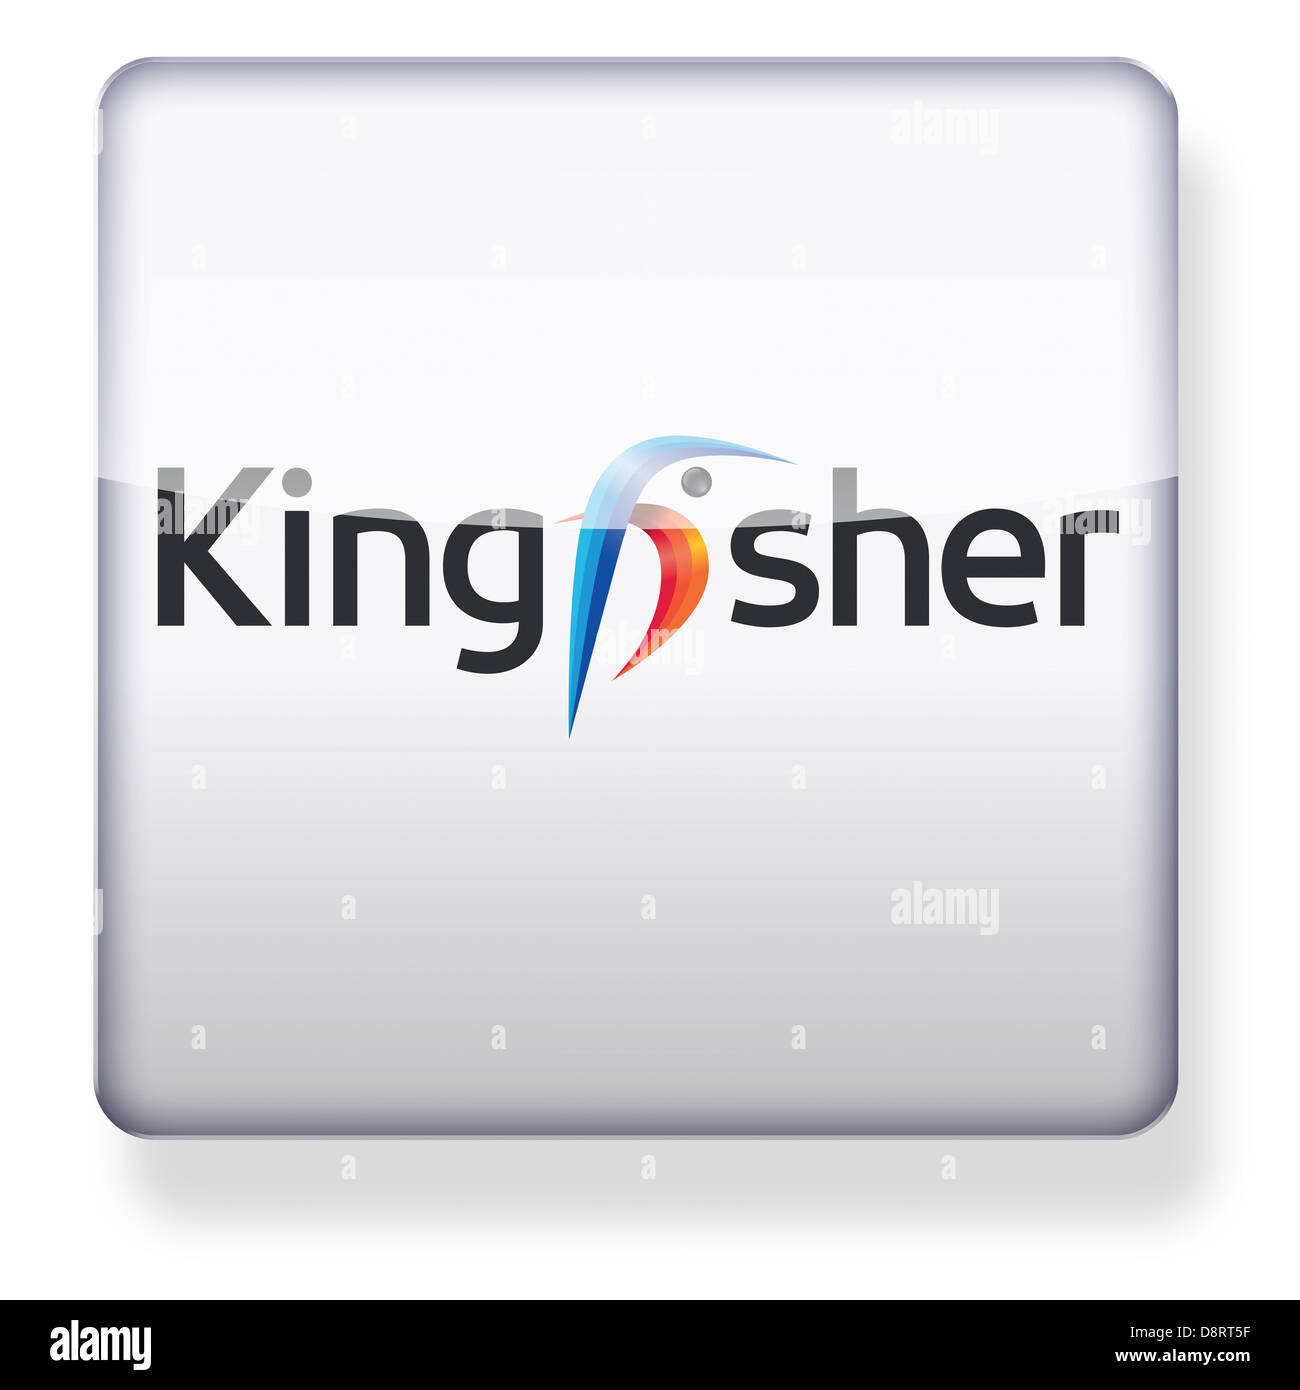 Kingfisher plc-Logo als ein app-Symbol. Clipping-Pfad enthalten. Stockfoto